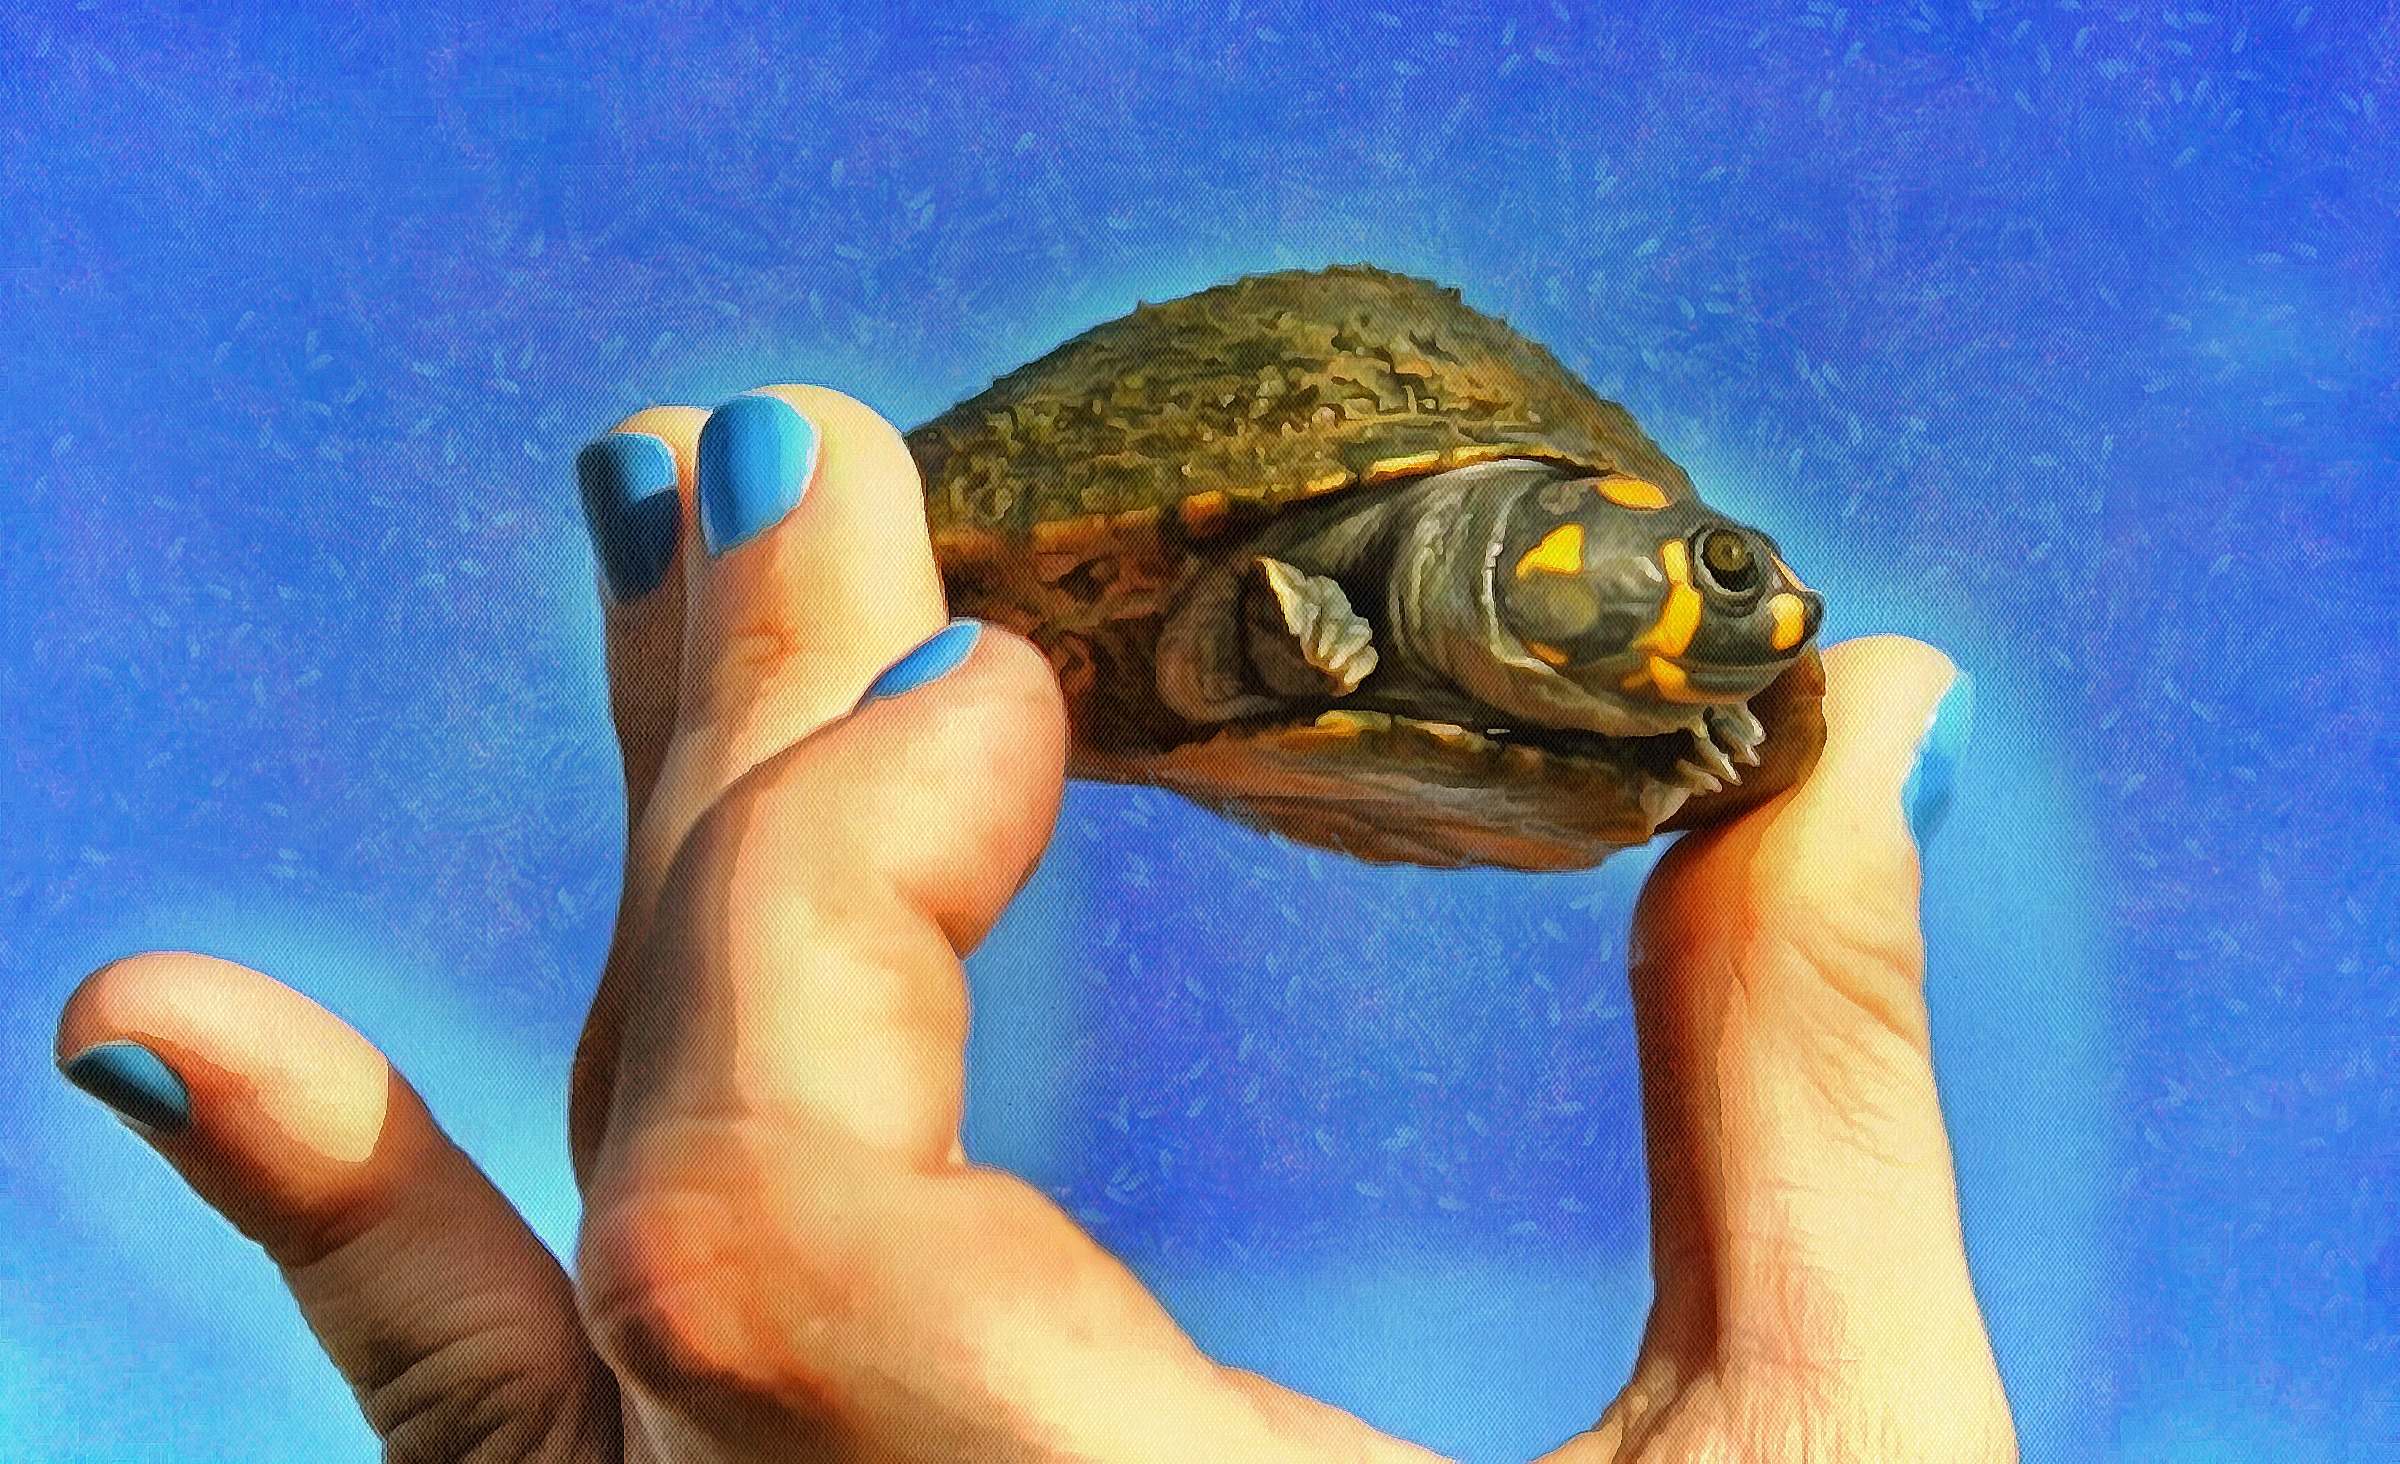 Turtle free images, Free Tortoise images, – free images turtles, tortoise public domain images, Turtle public domain images, Tortoise free!